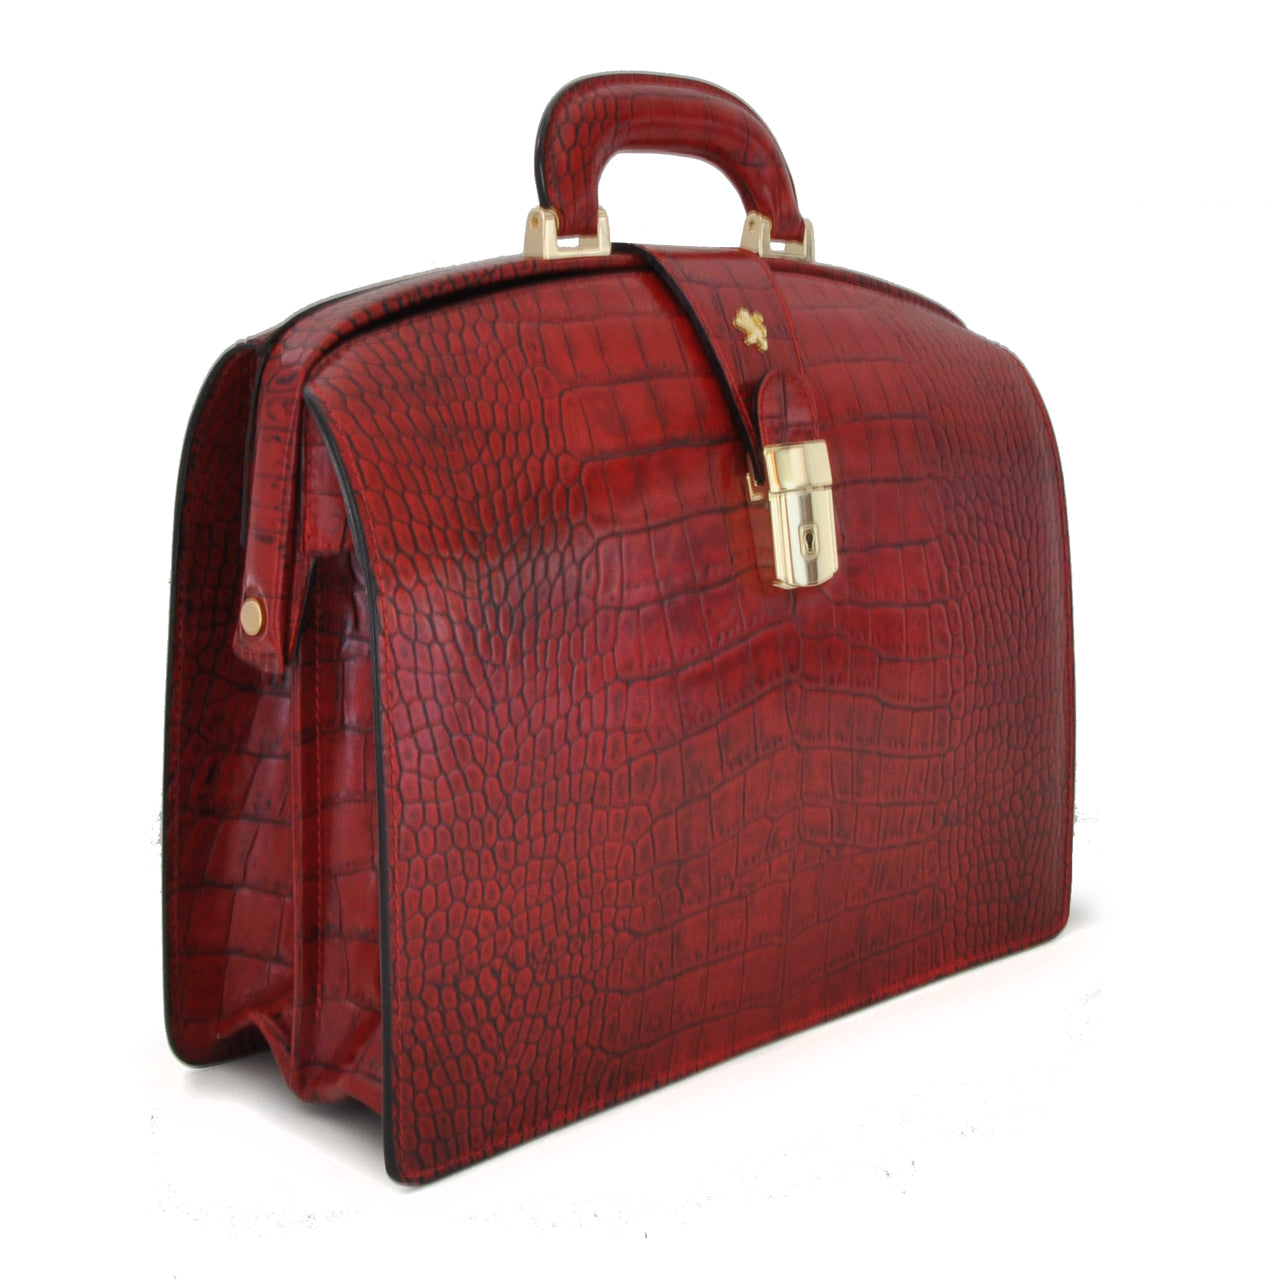 Pratesi Brunelleschi Small King Briefcase in genuine Italian leather